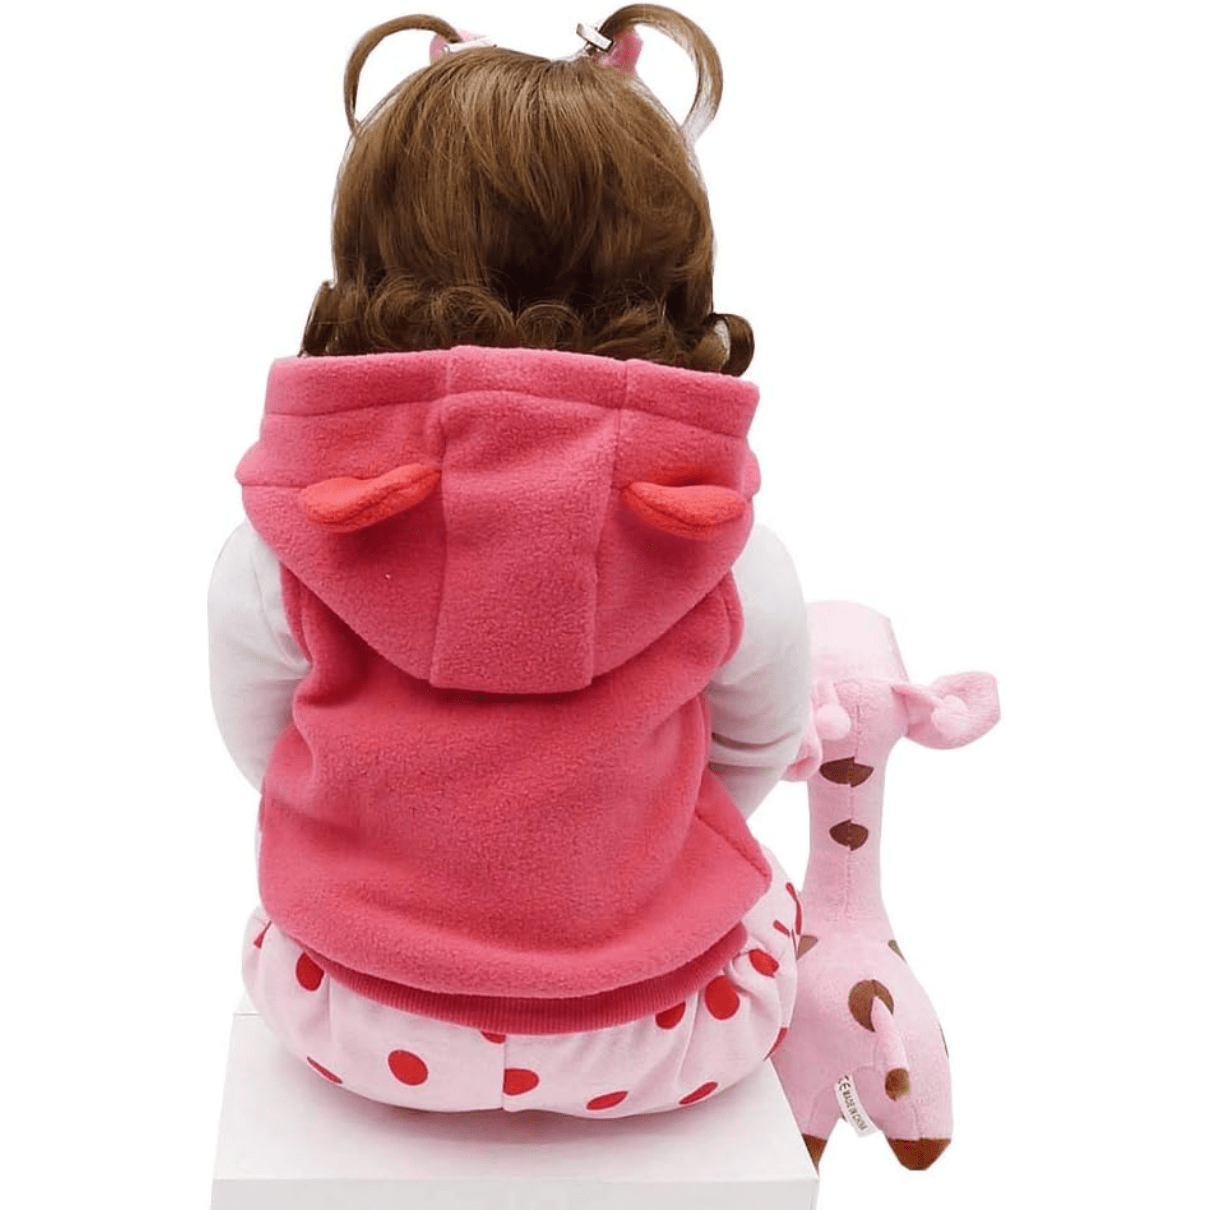 Boneca Bebê Reborn Laura Baby Nina 100% vinil - Shiny Toys